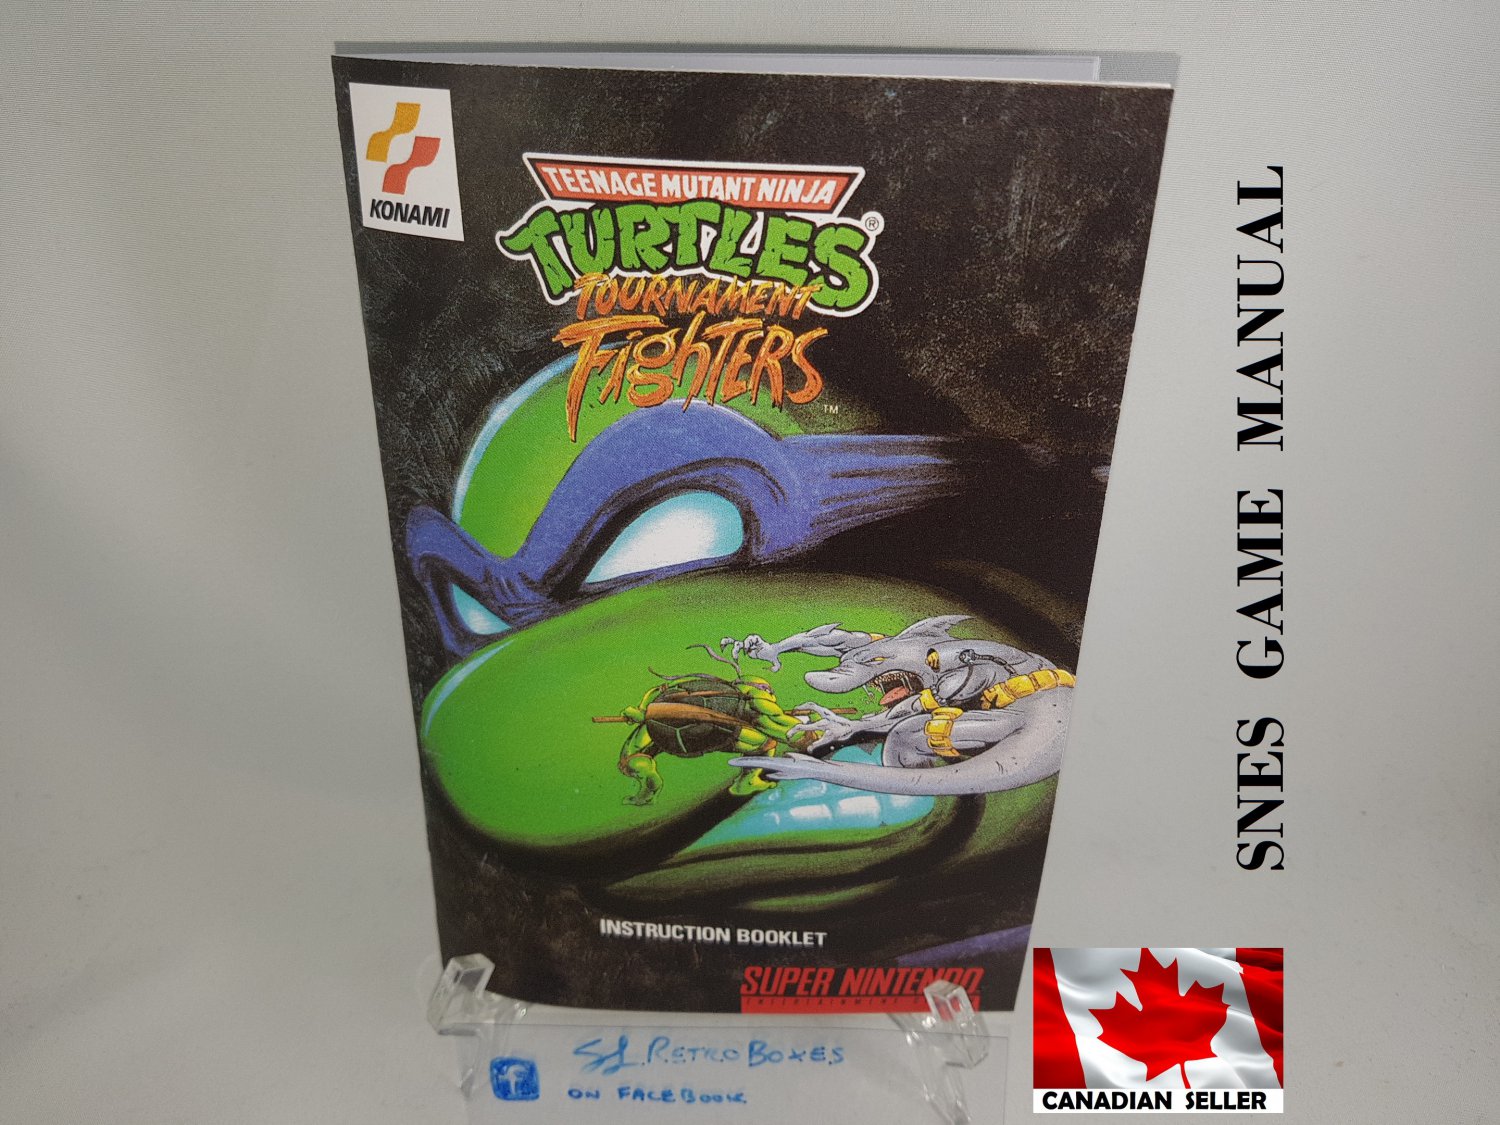 MANUAL SNES - TMNT TURTLES TOURNAMENT FIGHTER - Super Nintendo Instruction Manual Booklet